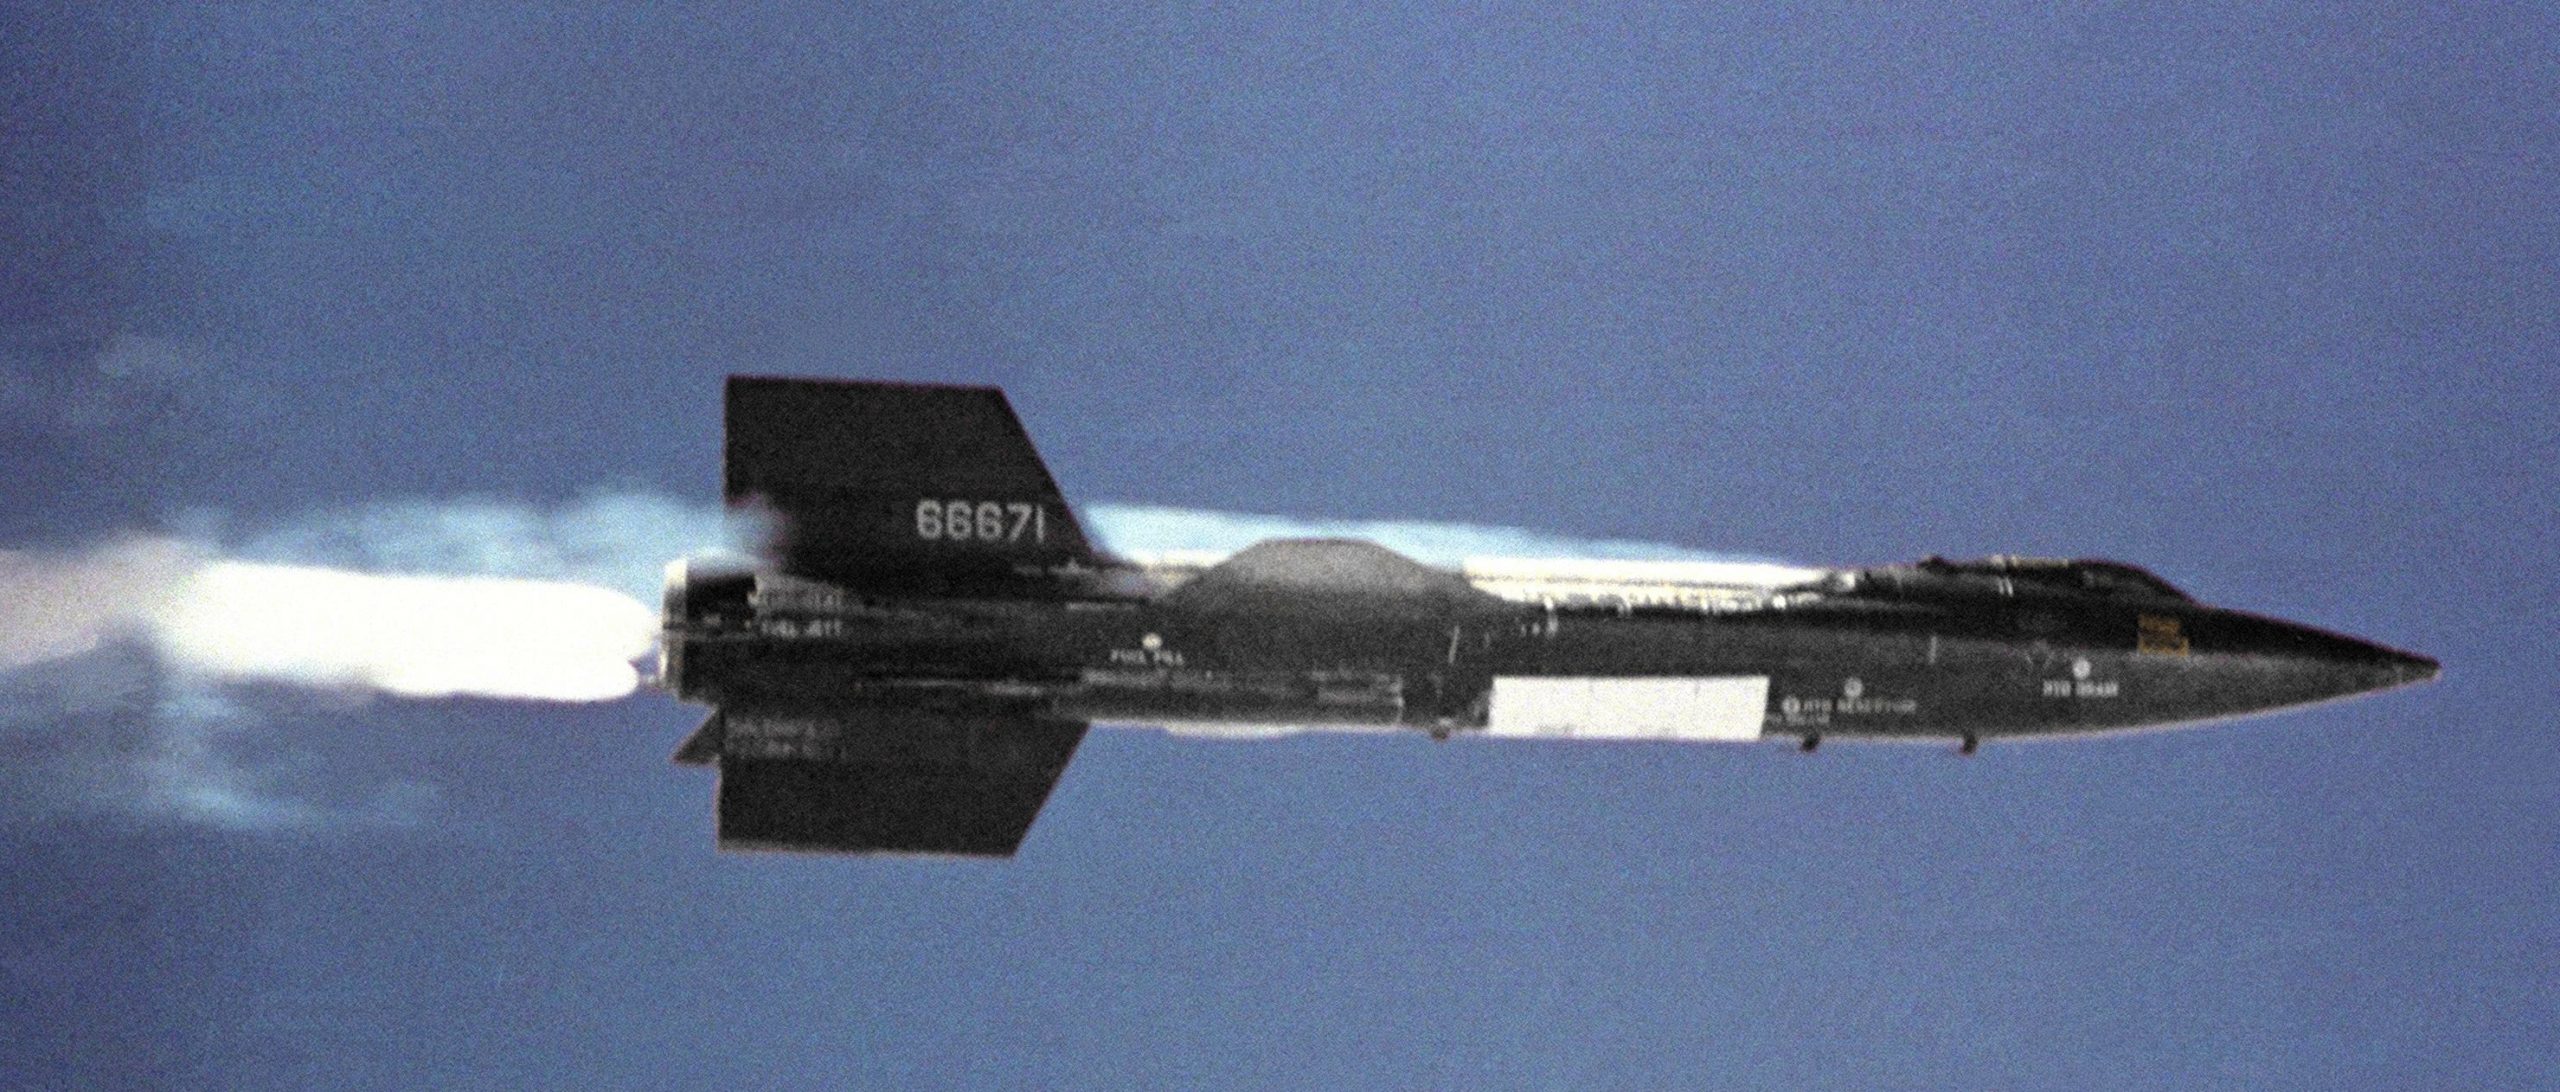 A photograph of a black aircraft on a dark blue backdrop.